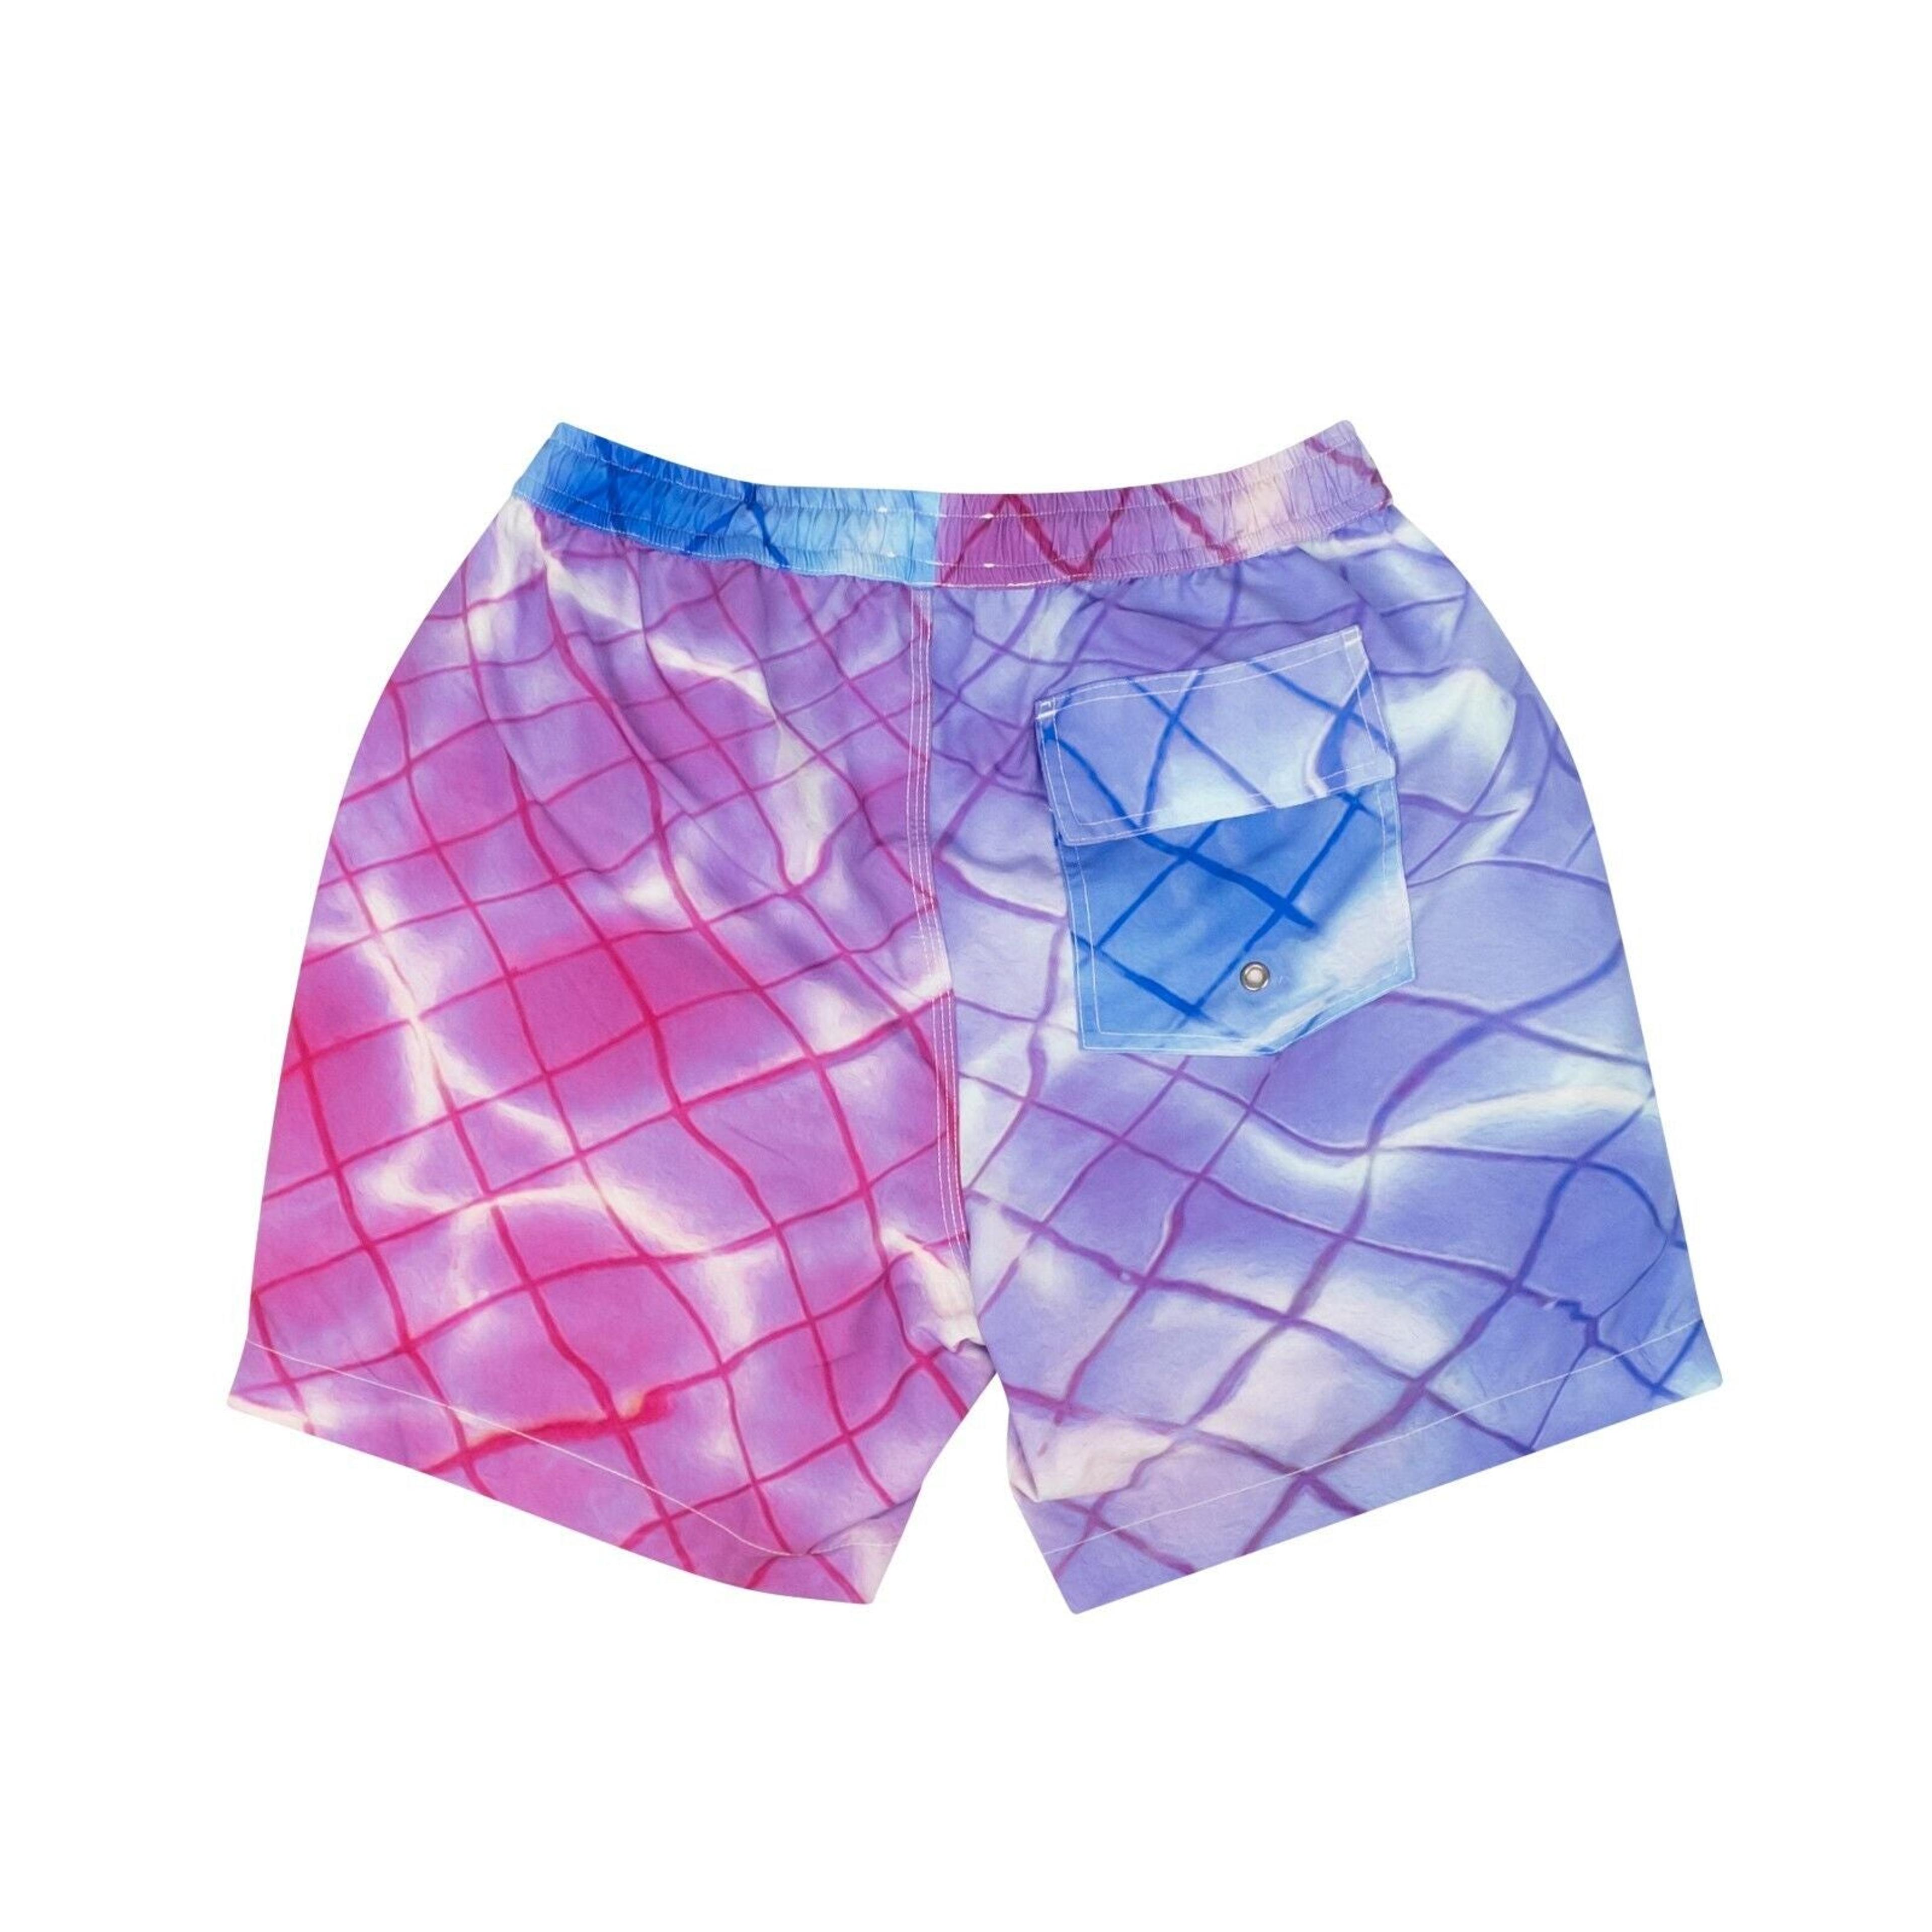 Alternate View 2 of Blue, Pink And Purple Pool Print Swim Trunks